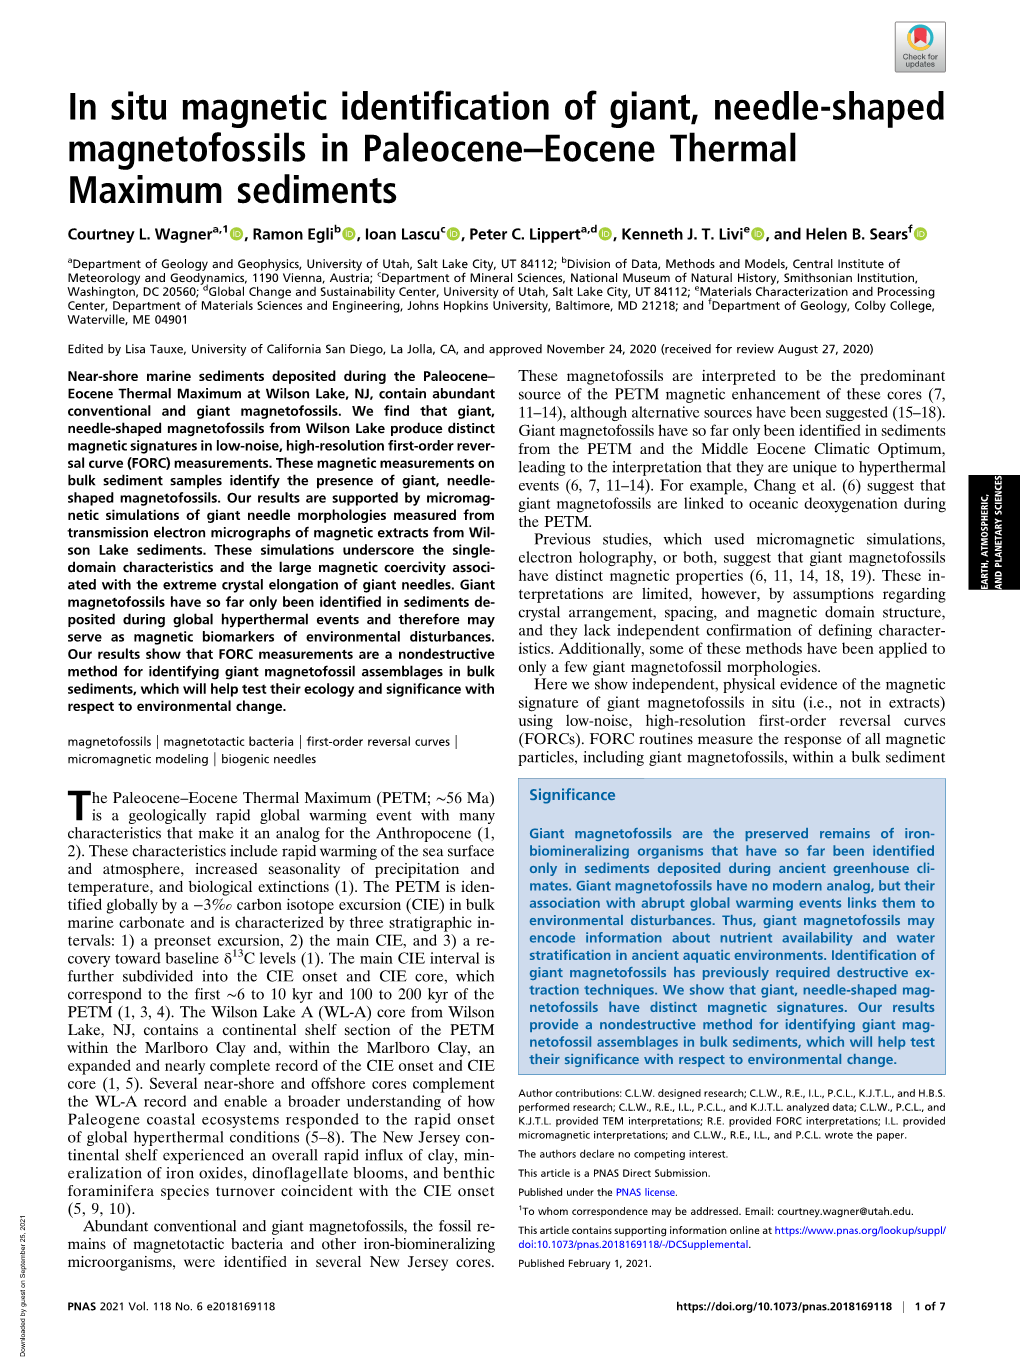 In Situ Magnetic Identification of Giant, Needle-Shaped Magnetofossils in Paleocene–Eocene Thermal Maximum Sediments